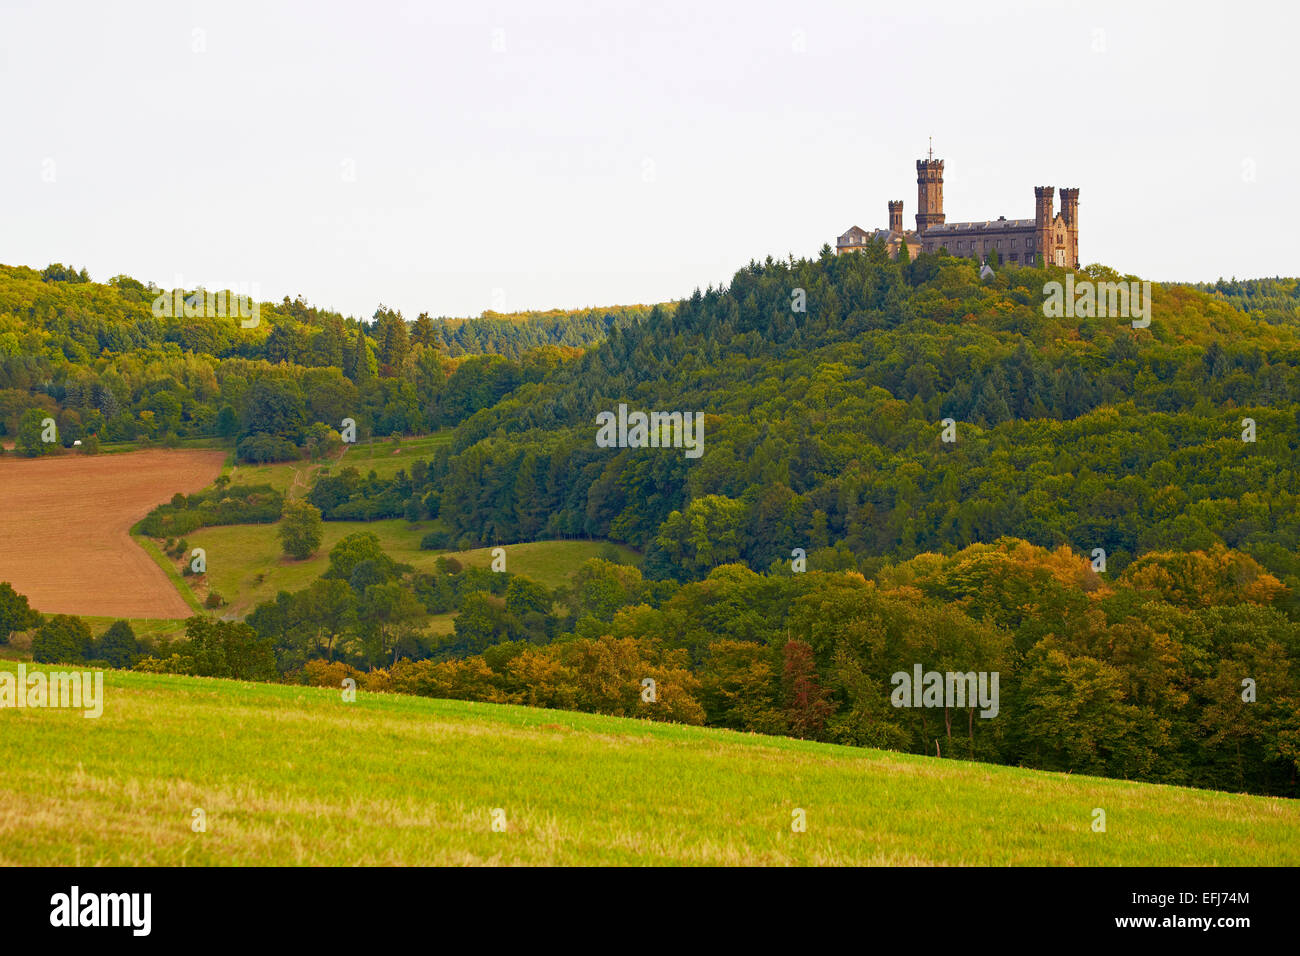 Burg Schaumburg près de Geilnau, Lahn, Westerwald, Rhénanie-Palatinat, Allemagne, Europe Banque D'Images